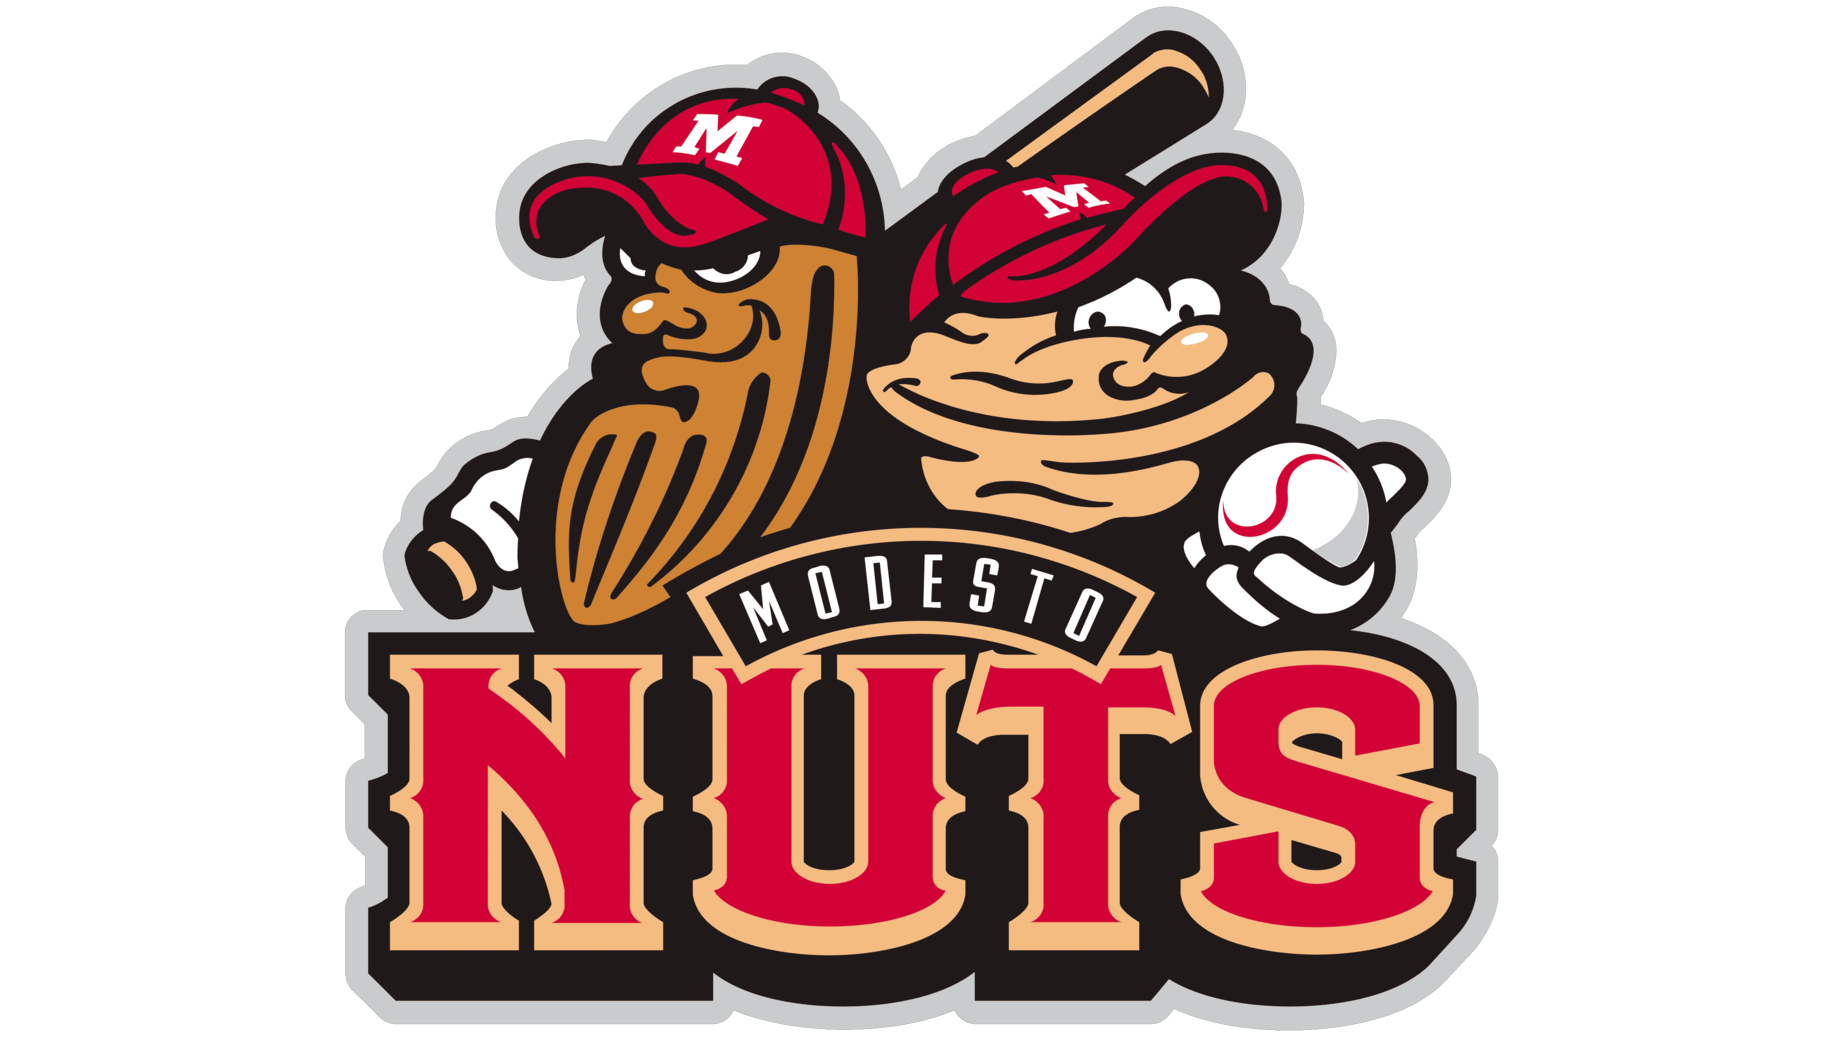 Modesto nuts logo